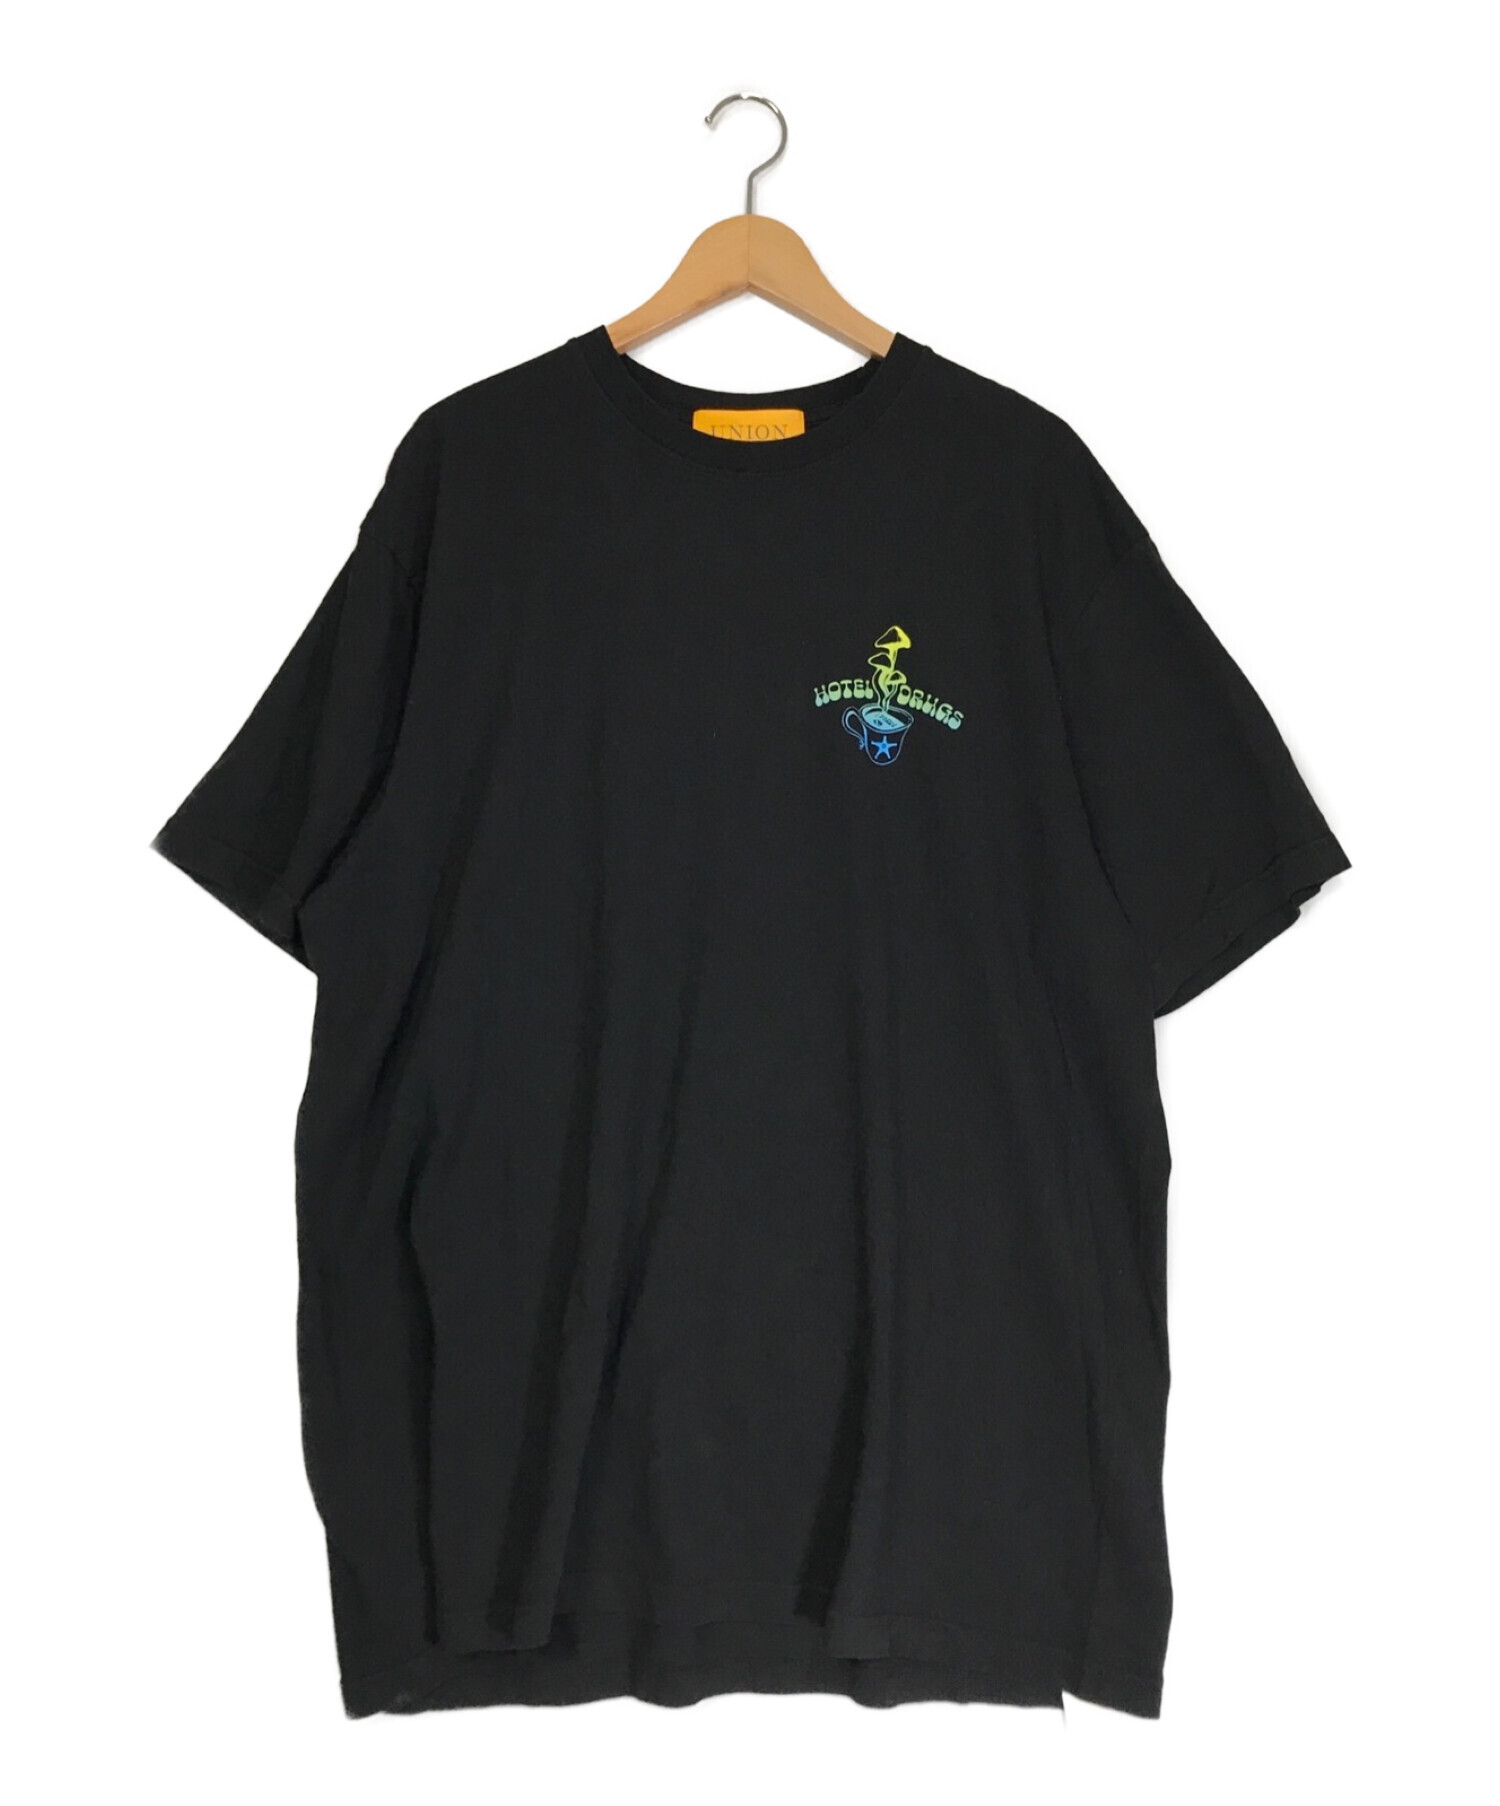 Verdy Visty x Union(ユニオンLA) T-Shirt - トップス